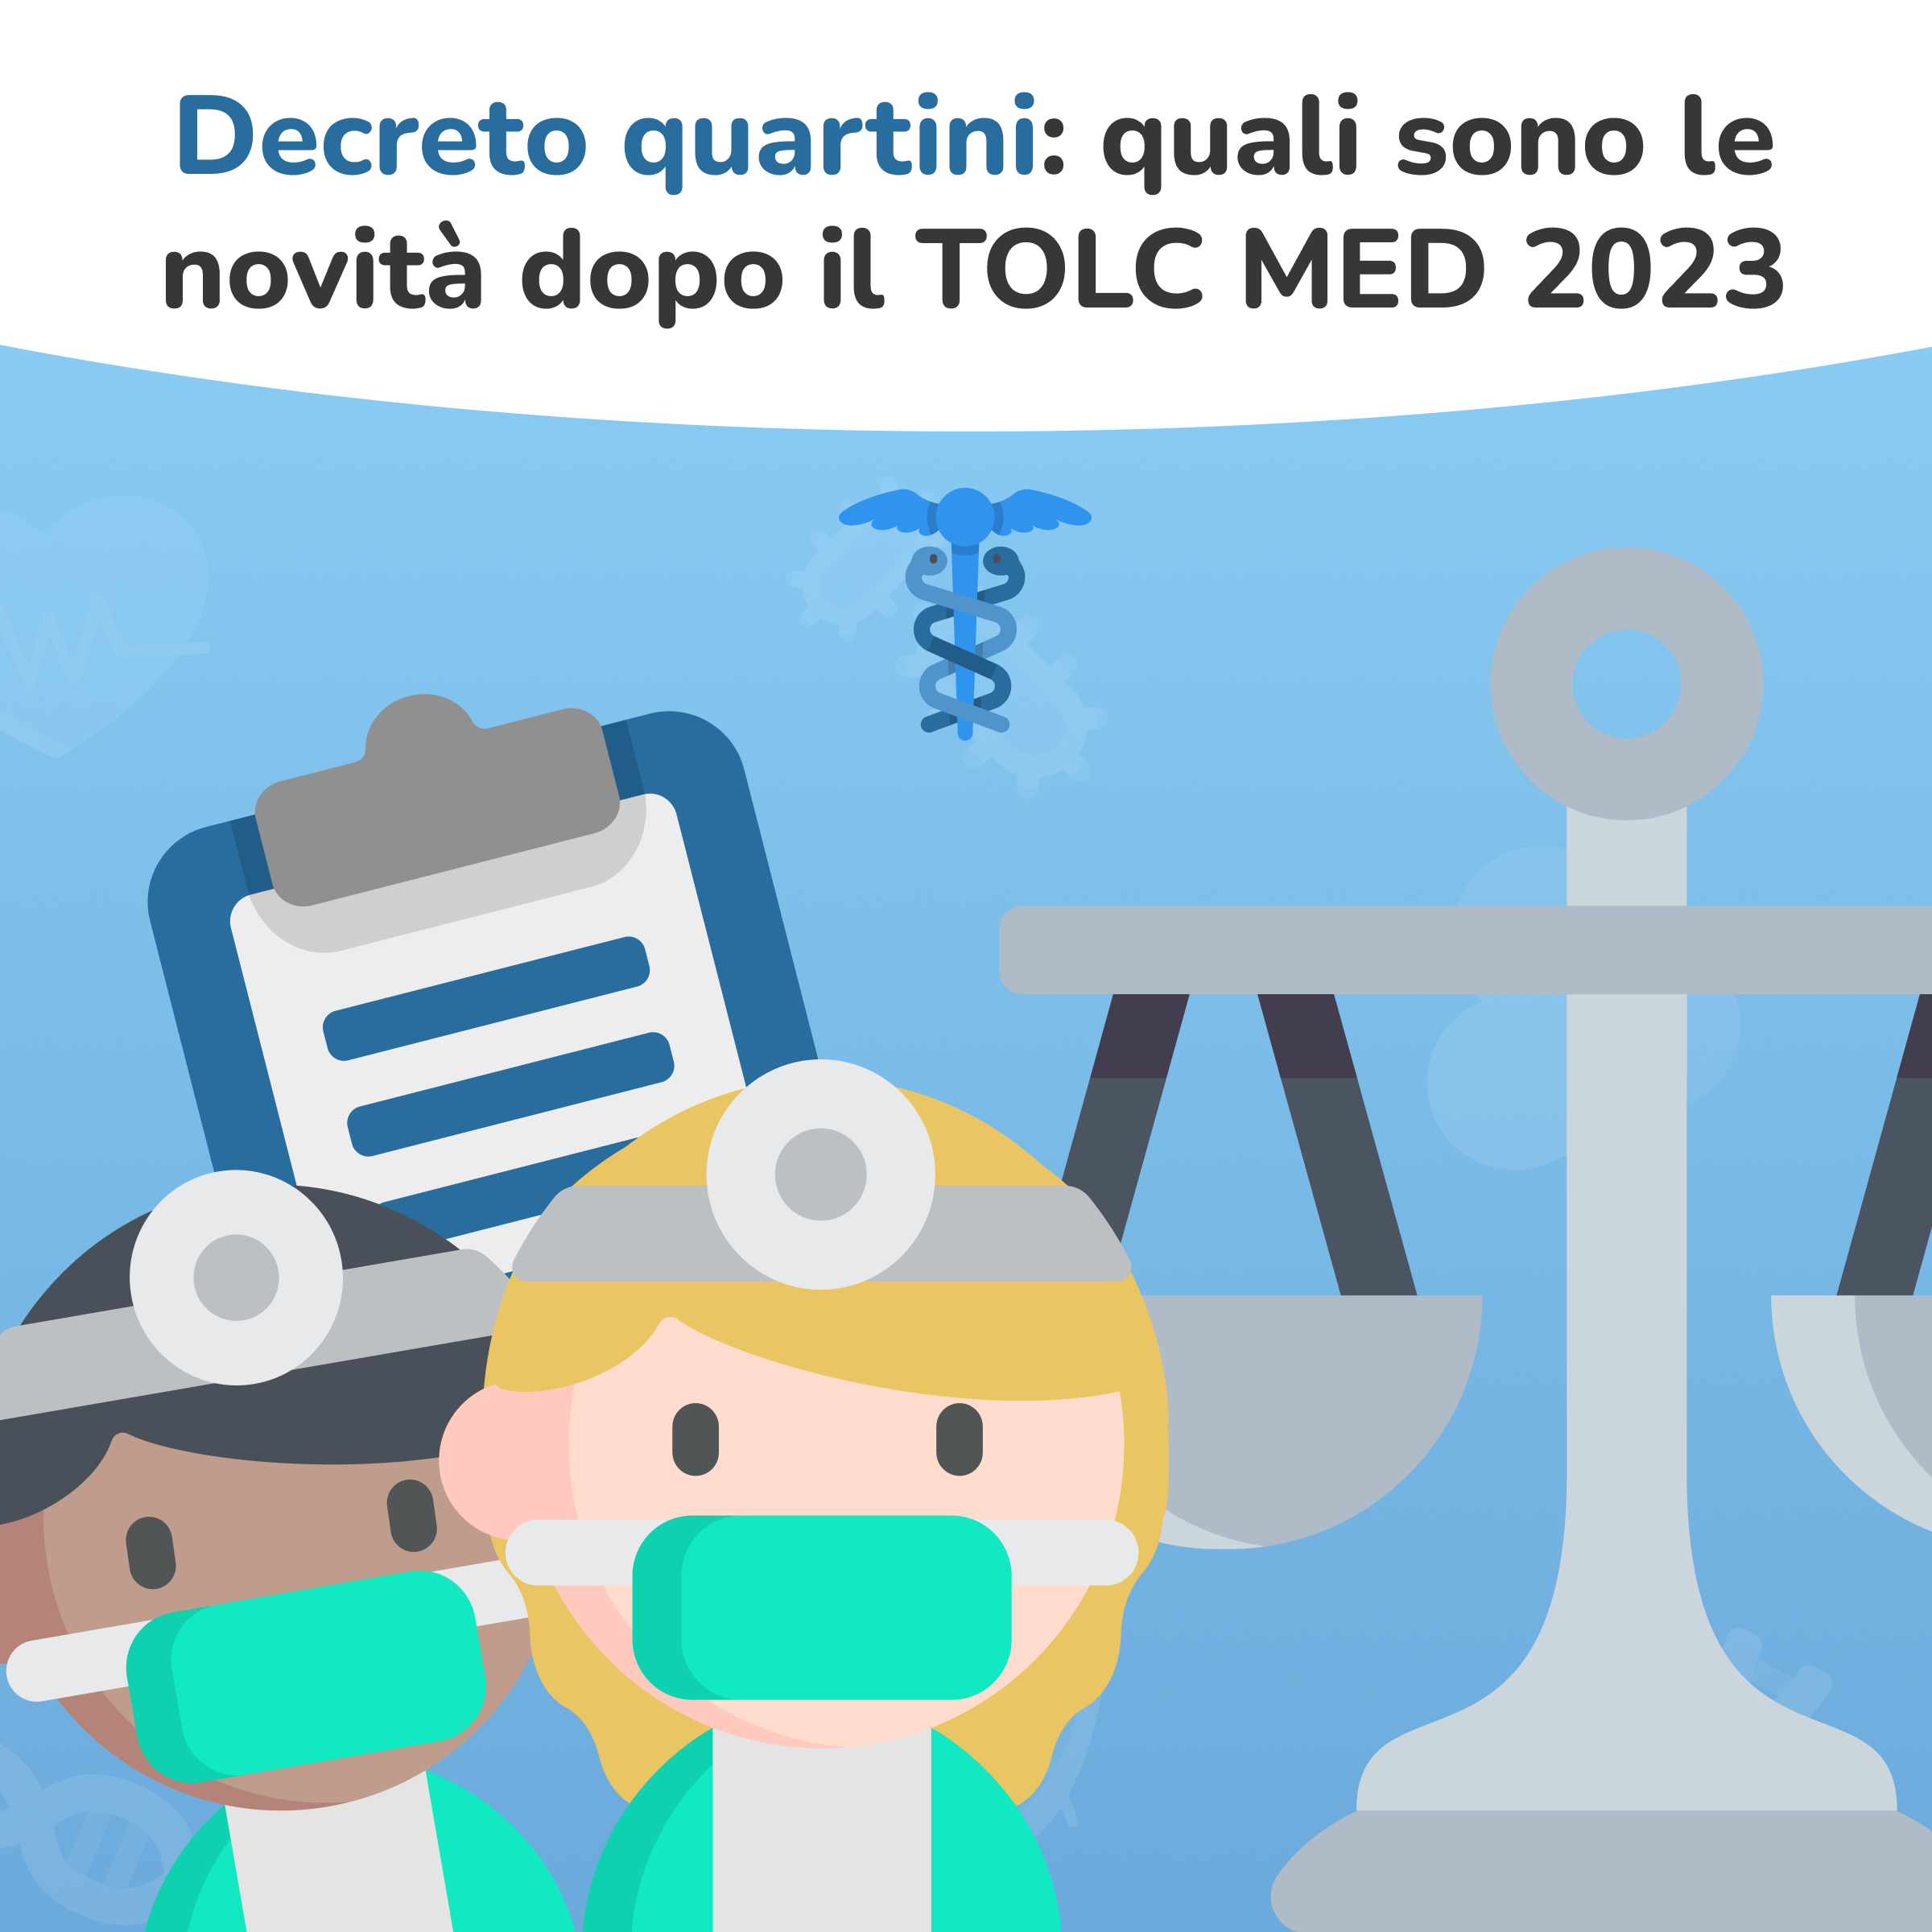 decreto quartini medicina tolc med 2023 posti medicina quartini